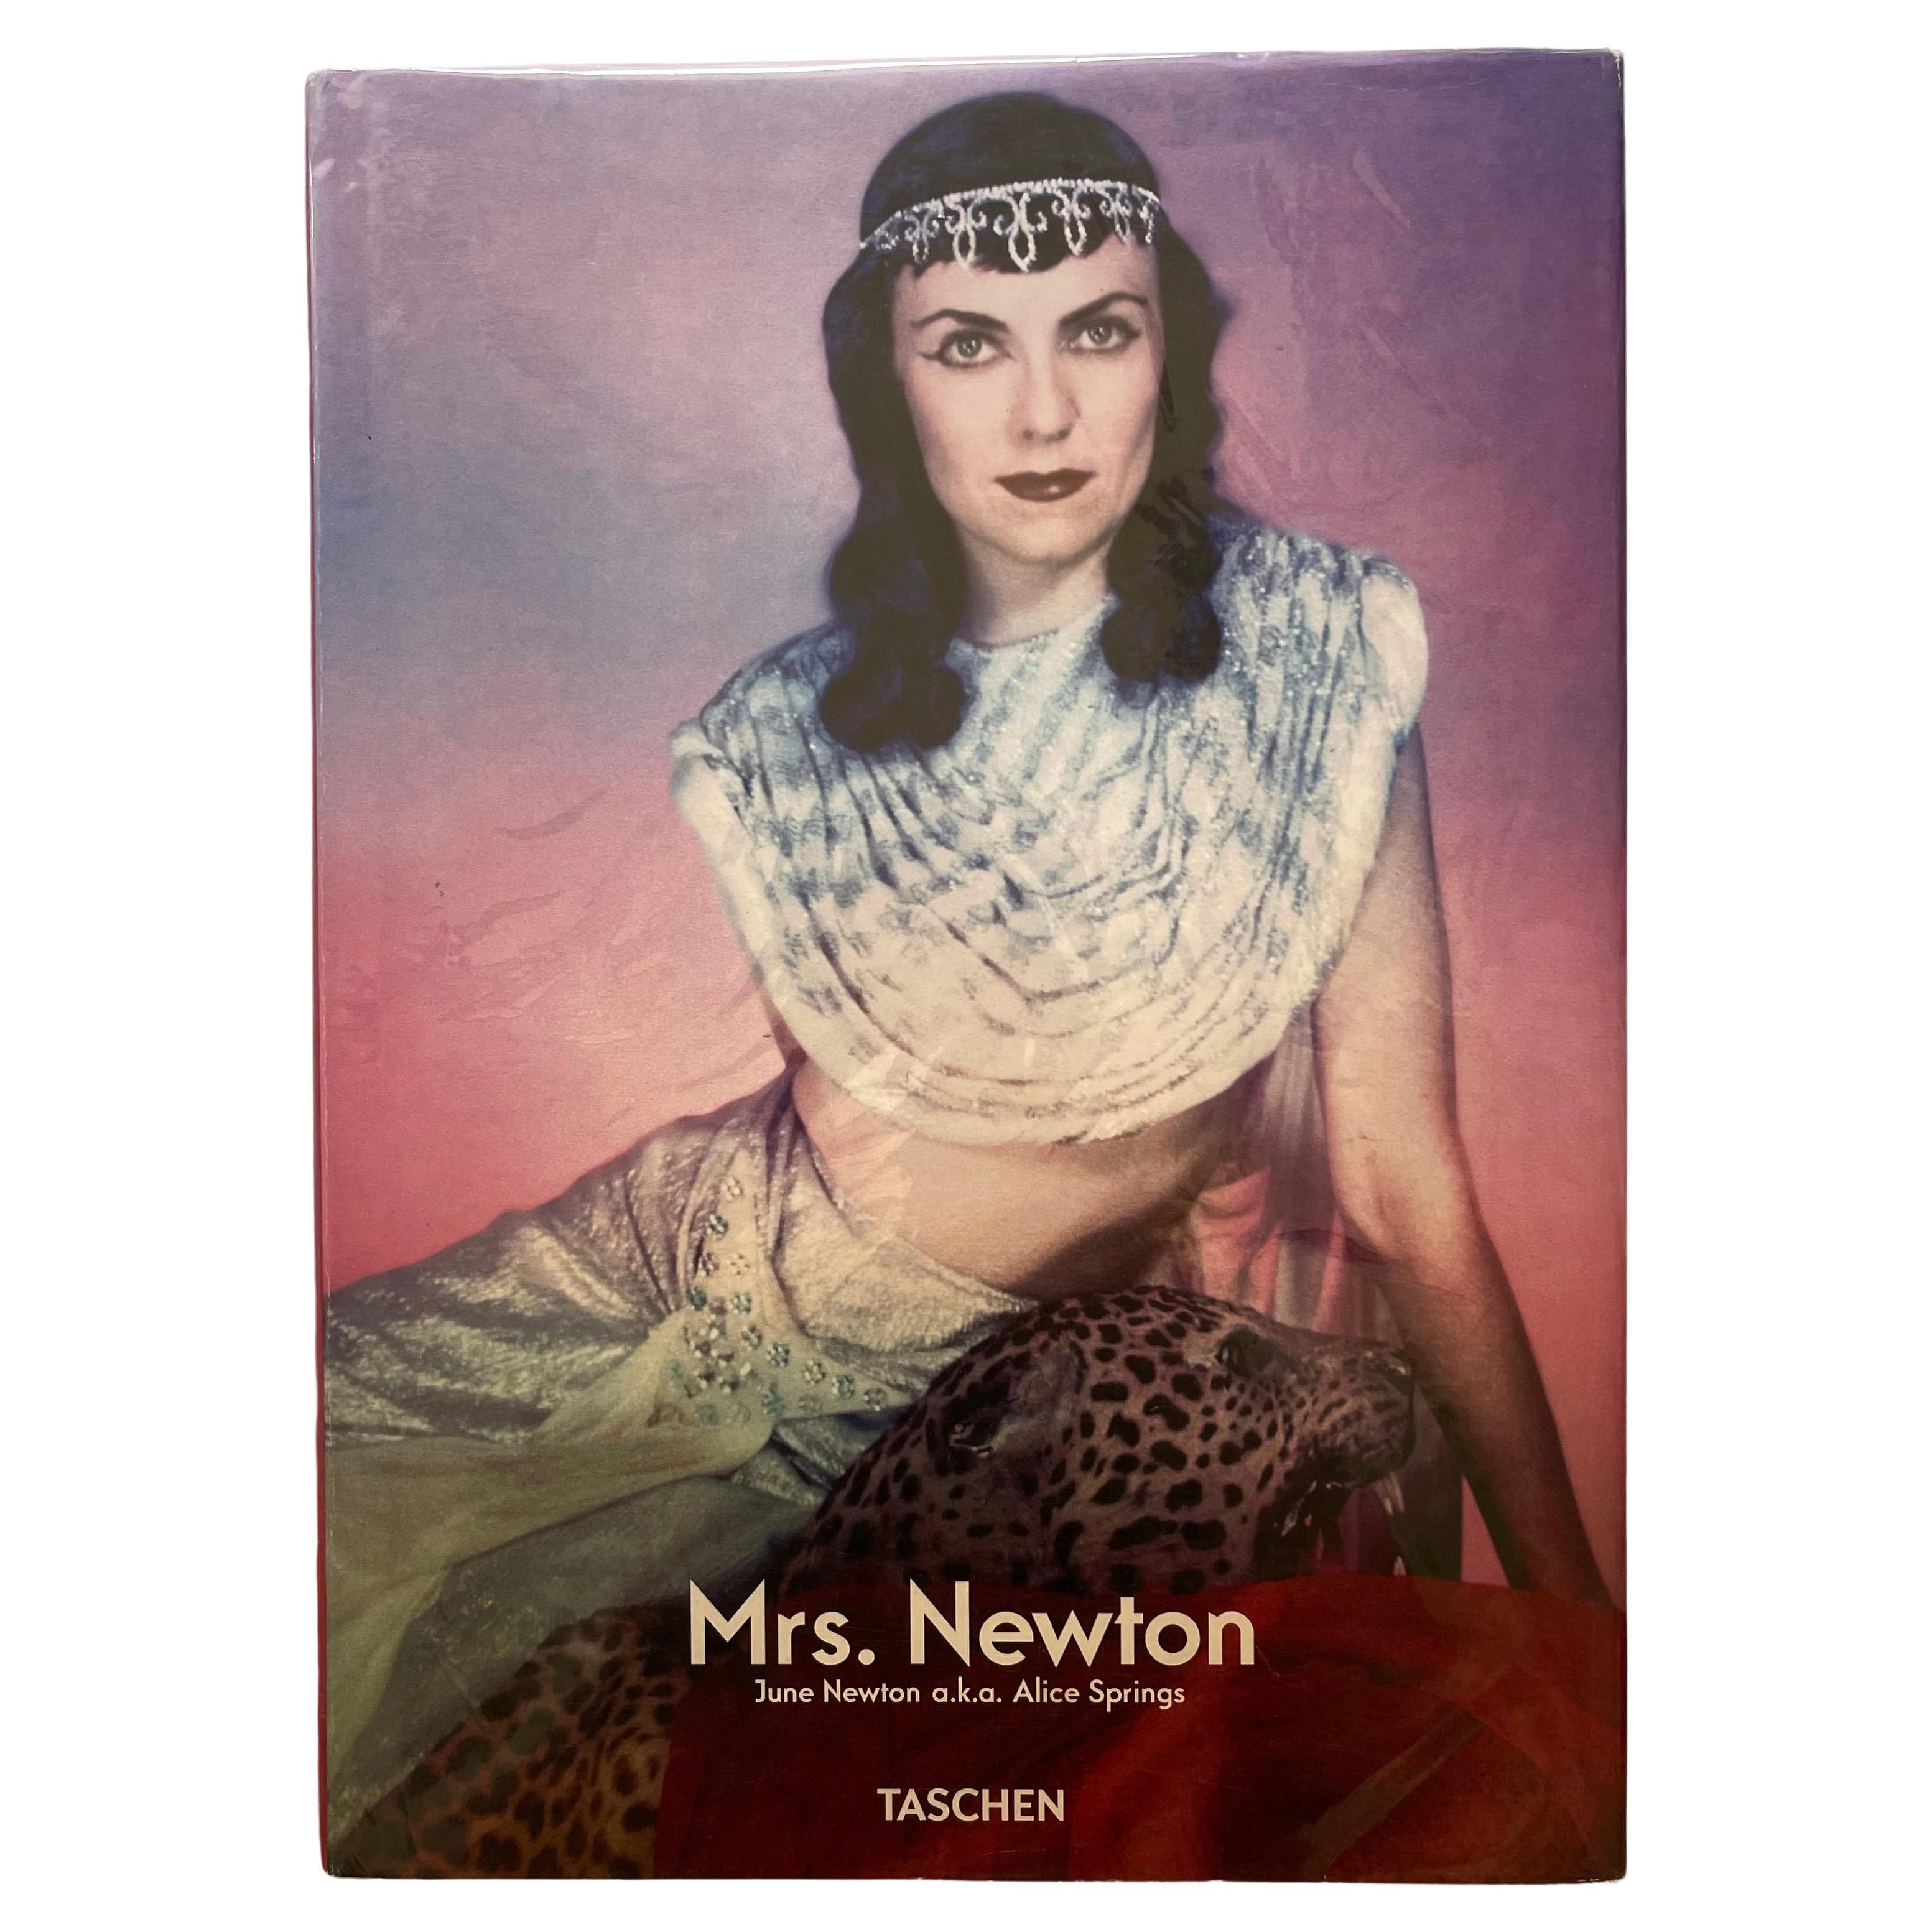 Mrs. Newton: June Newton a.k.a. Alice Springs - 1st Edition, Taschen, 2004